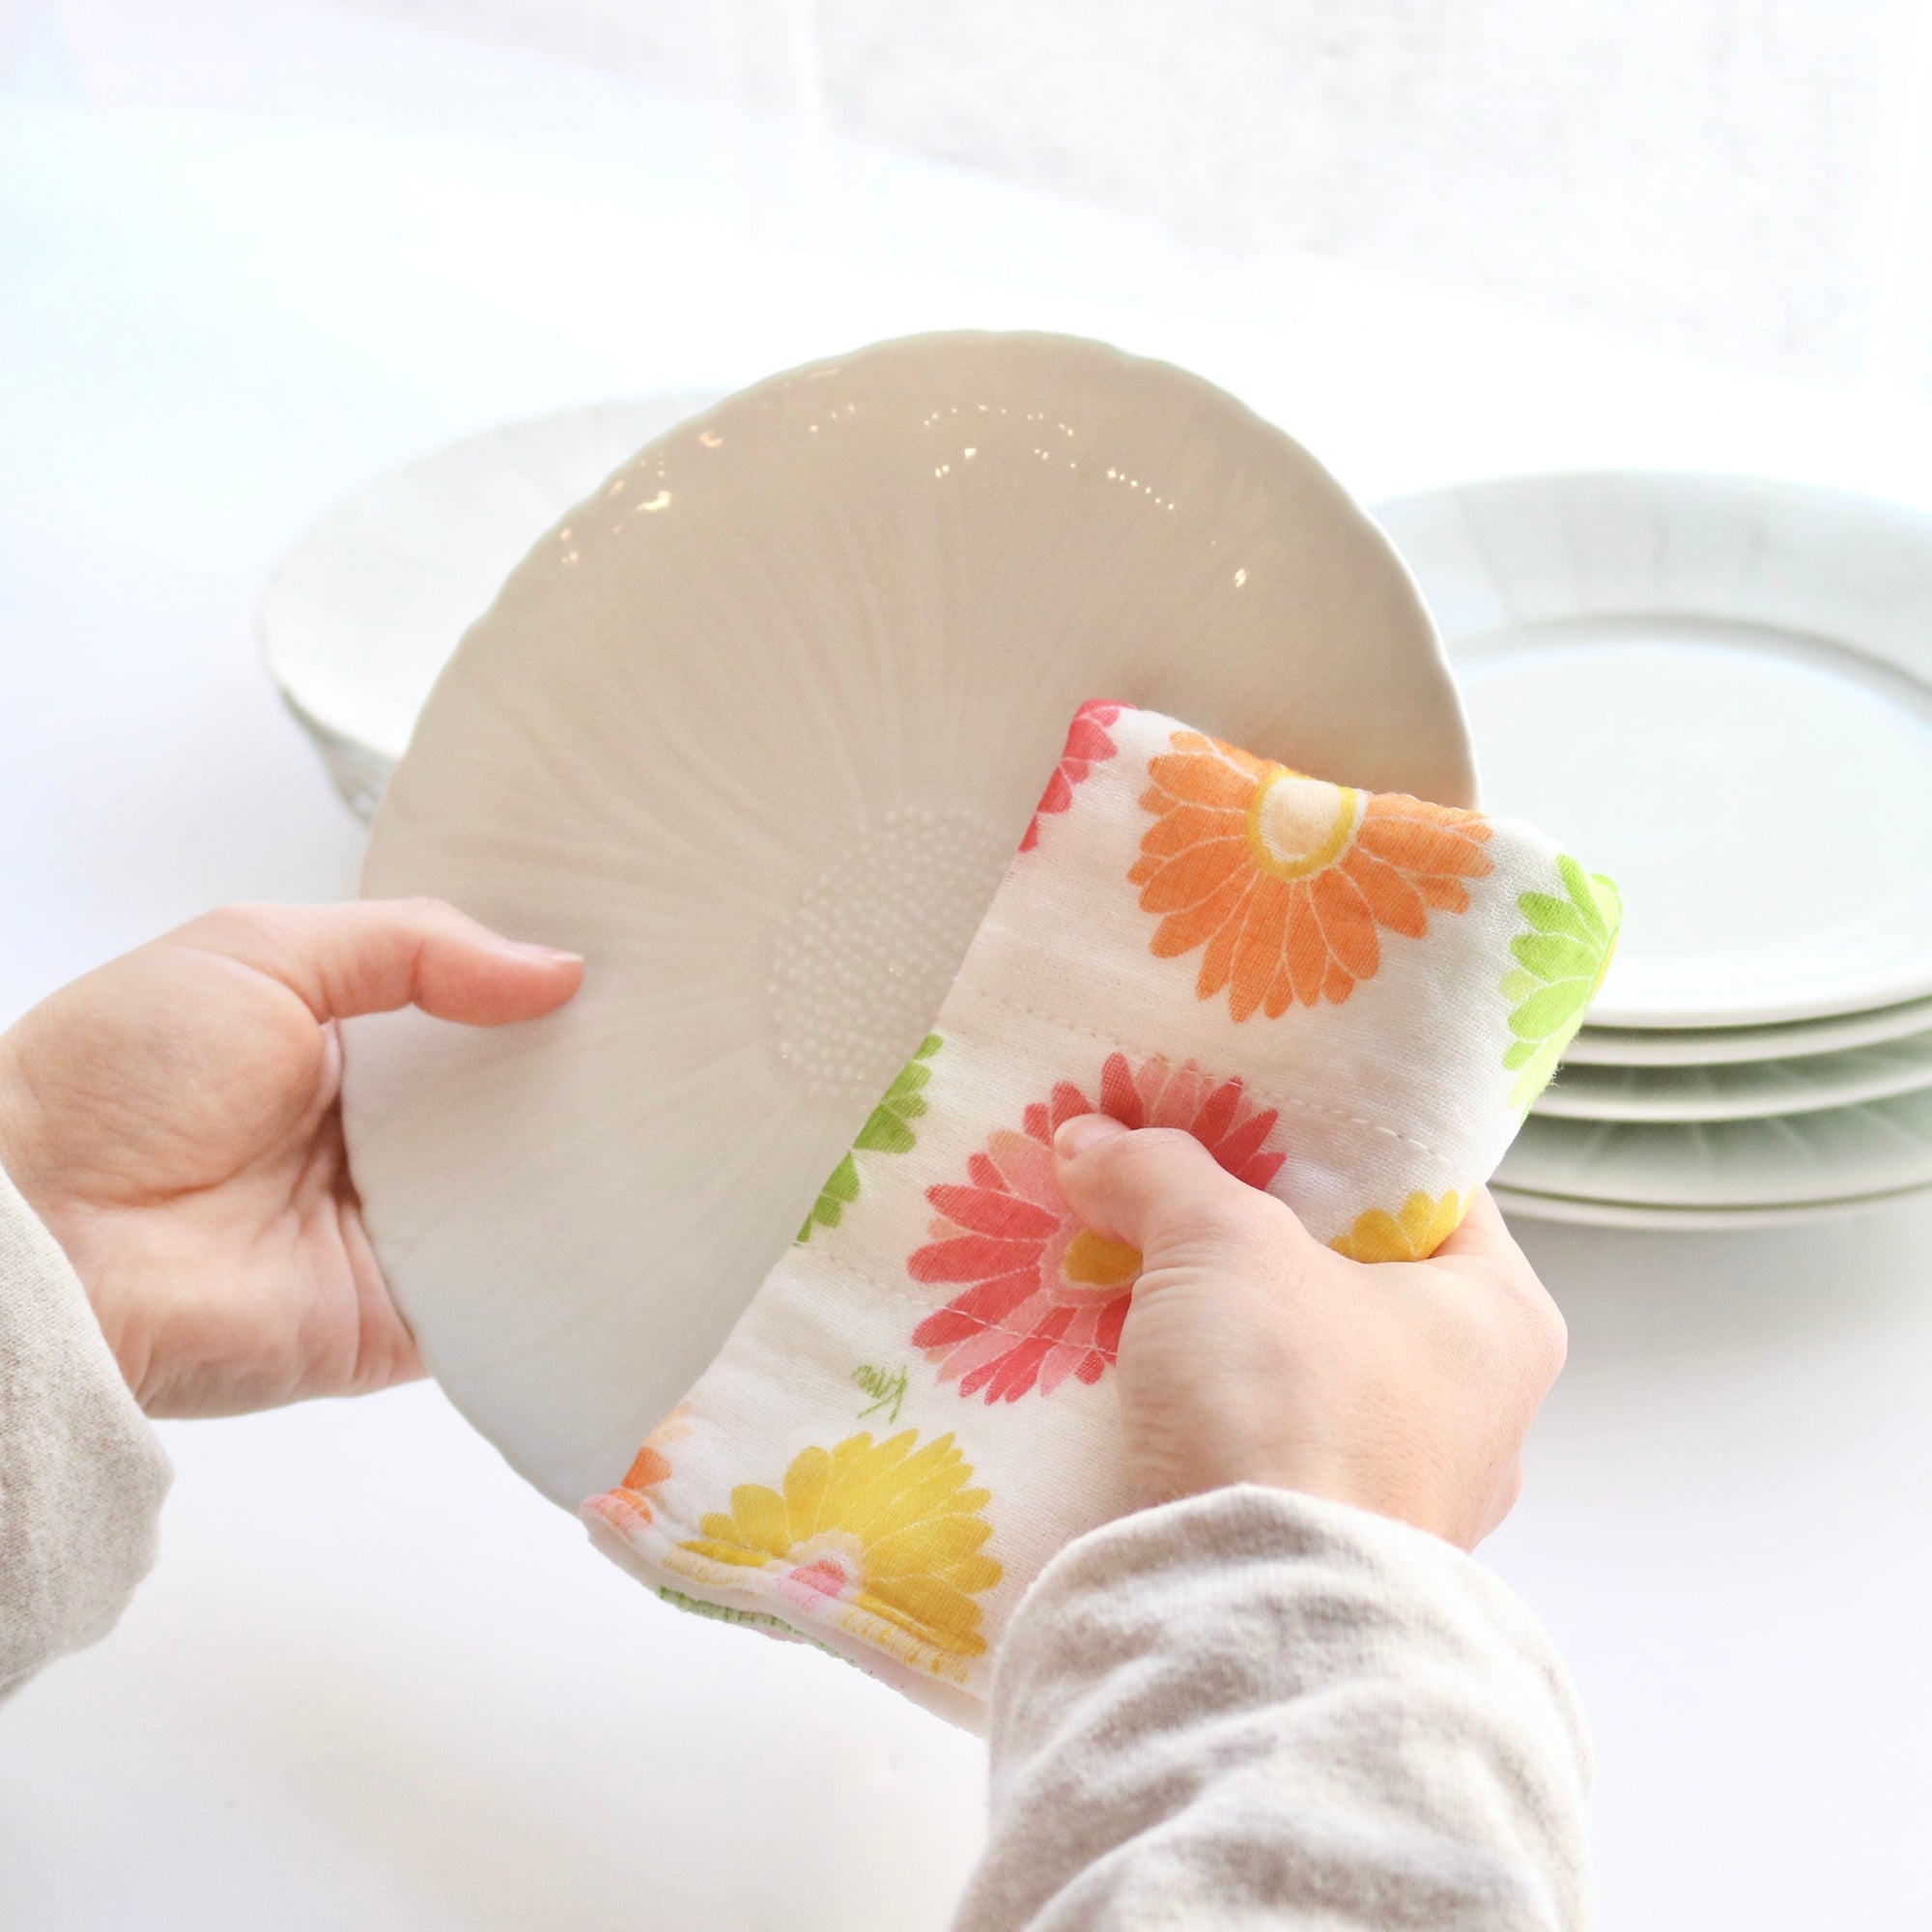 Shirayuki Japanese Kitchen Cloth. Made of Fine Layered Mesh Cloth. Dish Wipe, Table Wipe. Made in Japan (Gerbera Flower)